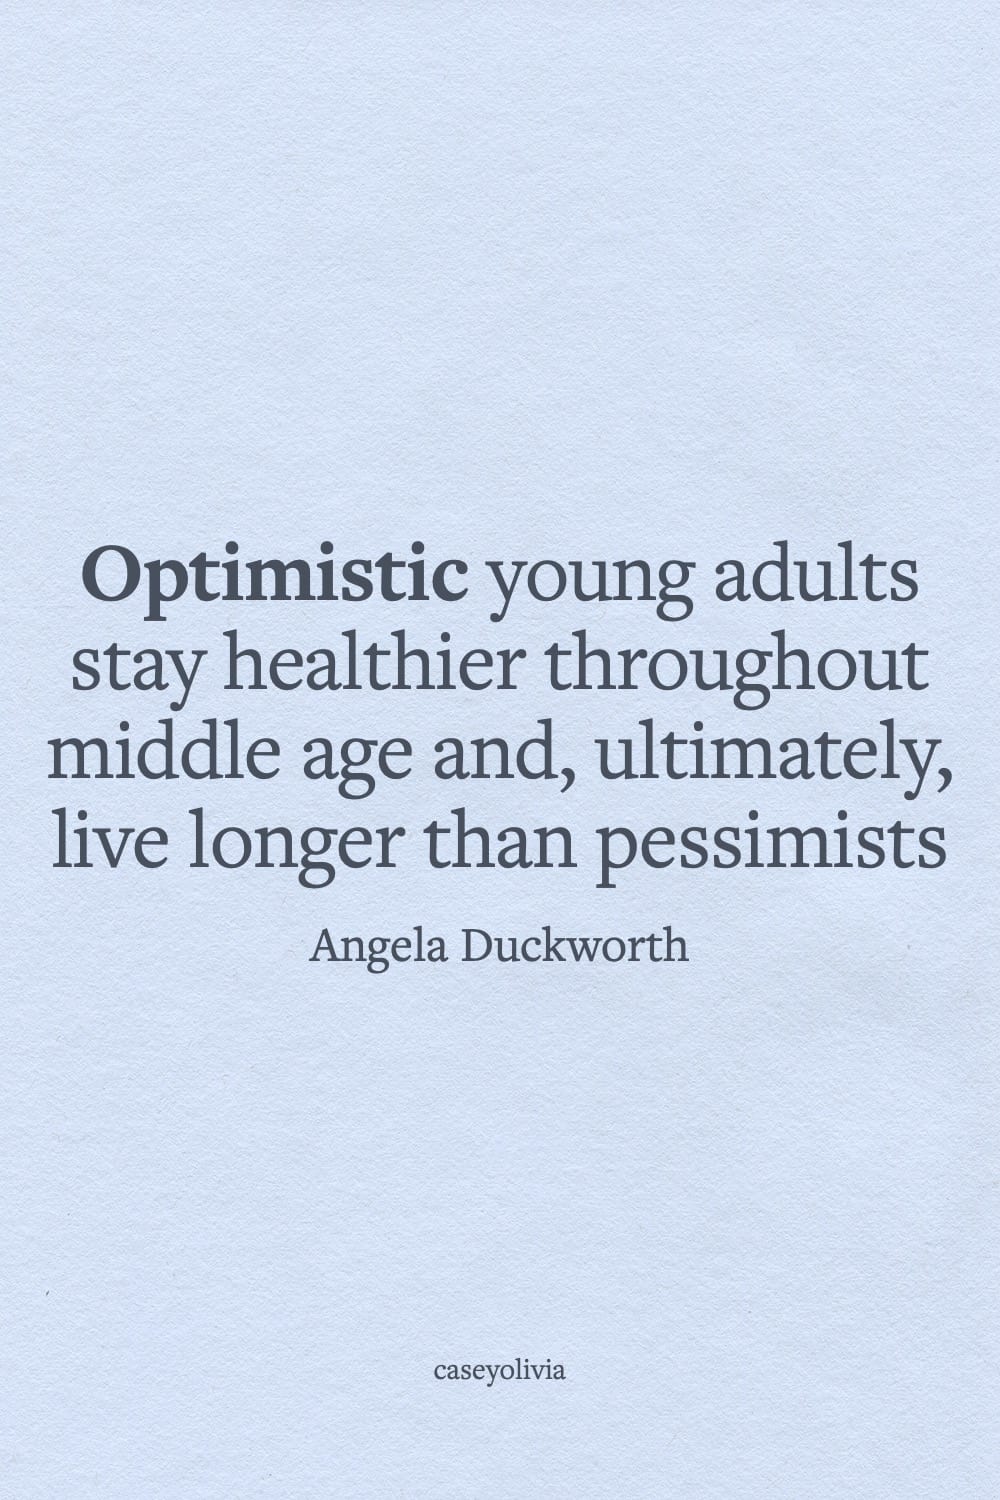 angela duckworth optimistic young adults quote